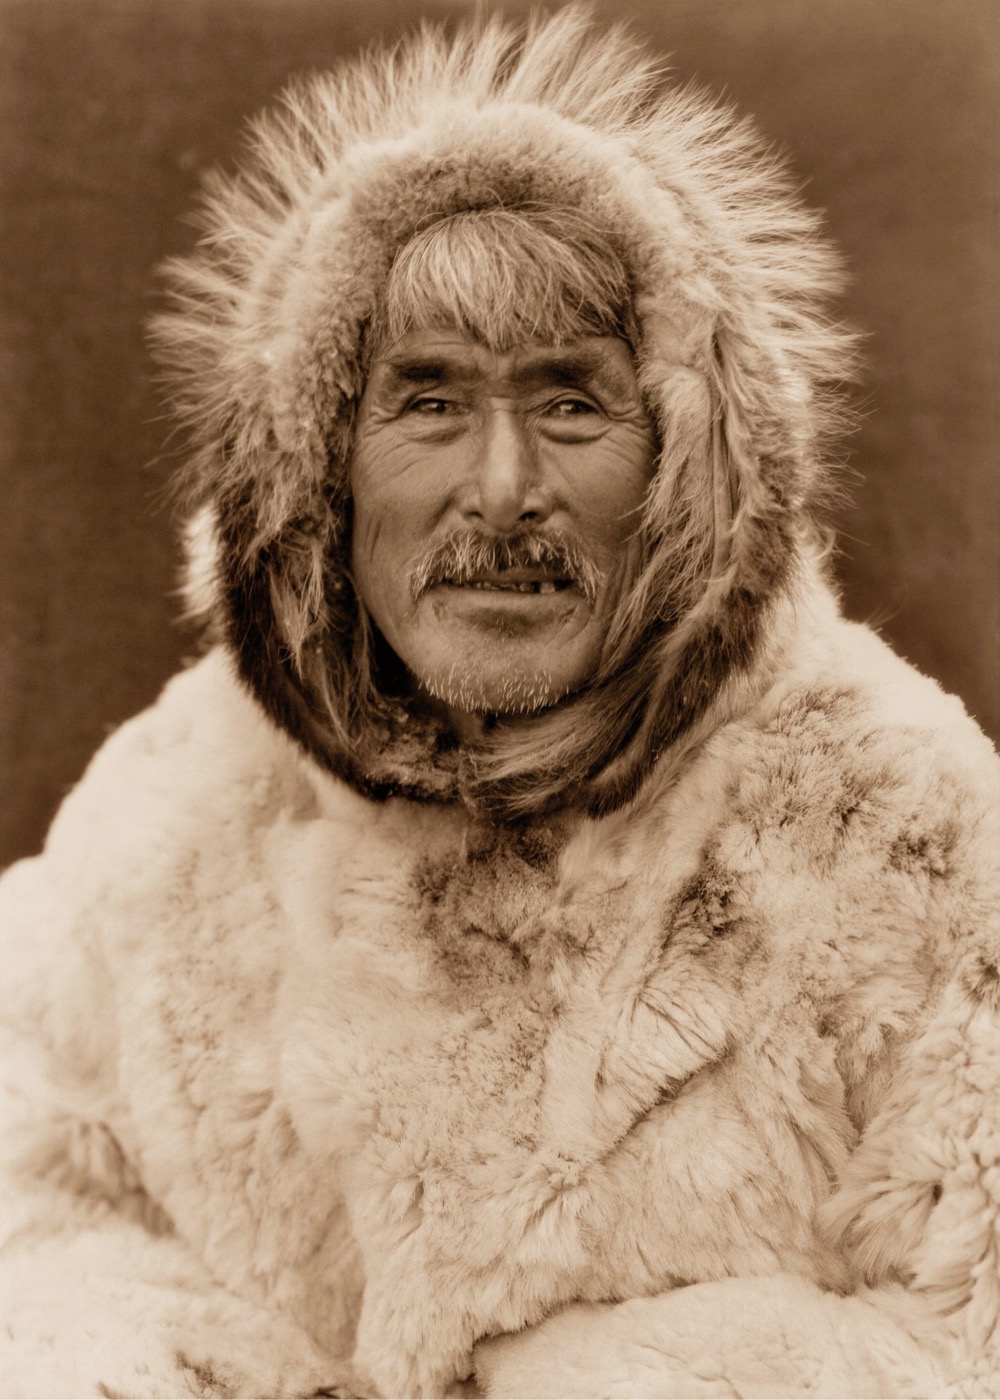 a man wearing a fur coat